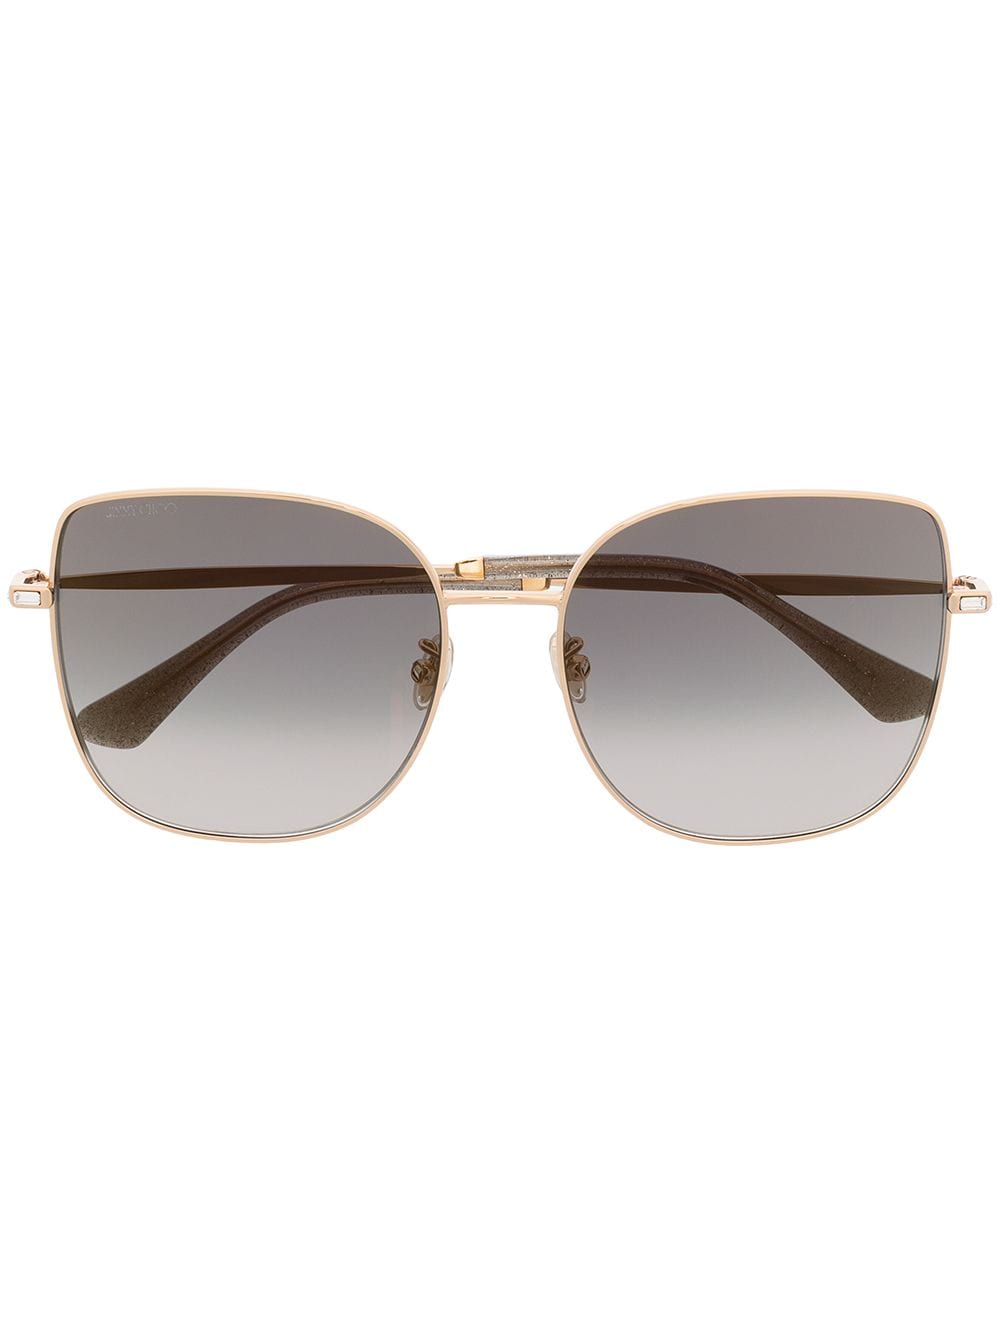 Jimmy Choo Eyewear oversized cat eye sunglasses - Gold von Jimmy Choo Eyewear